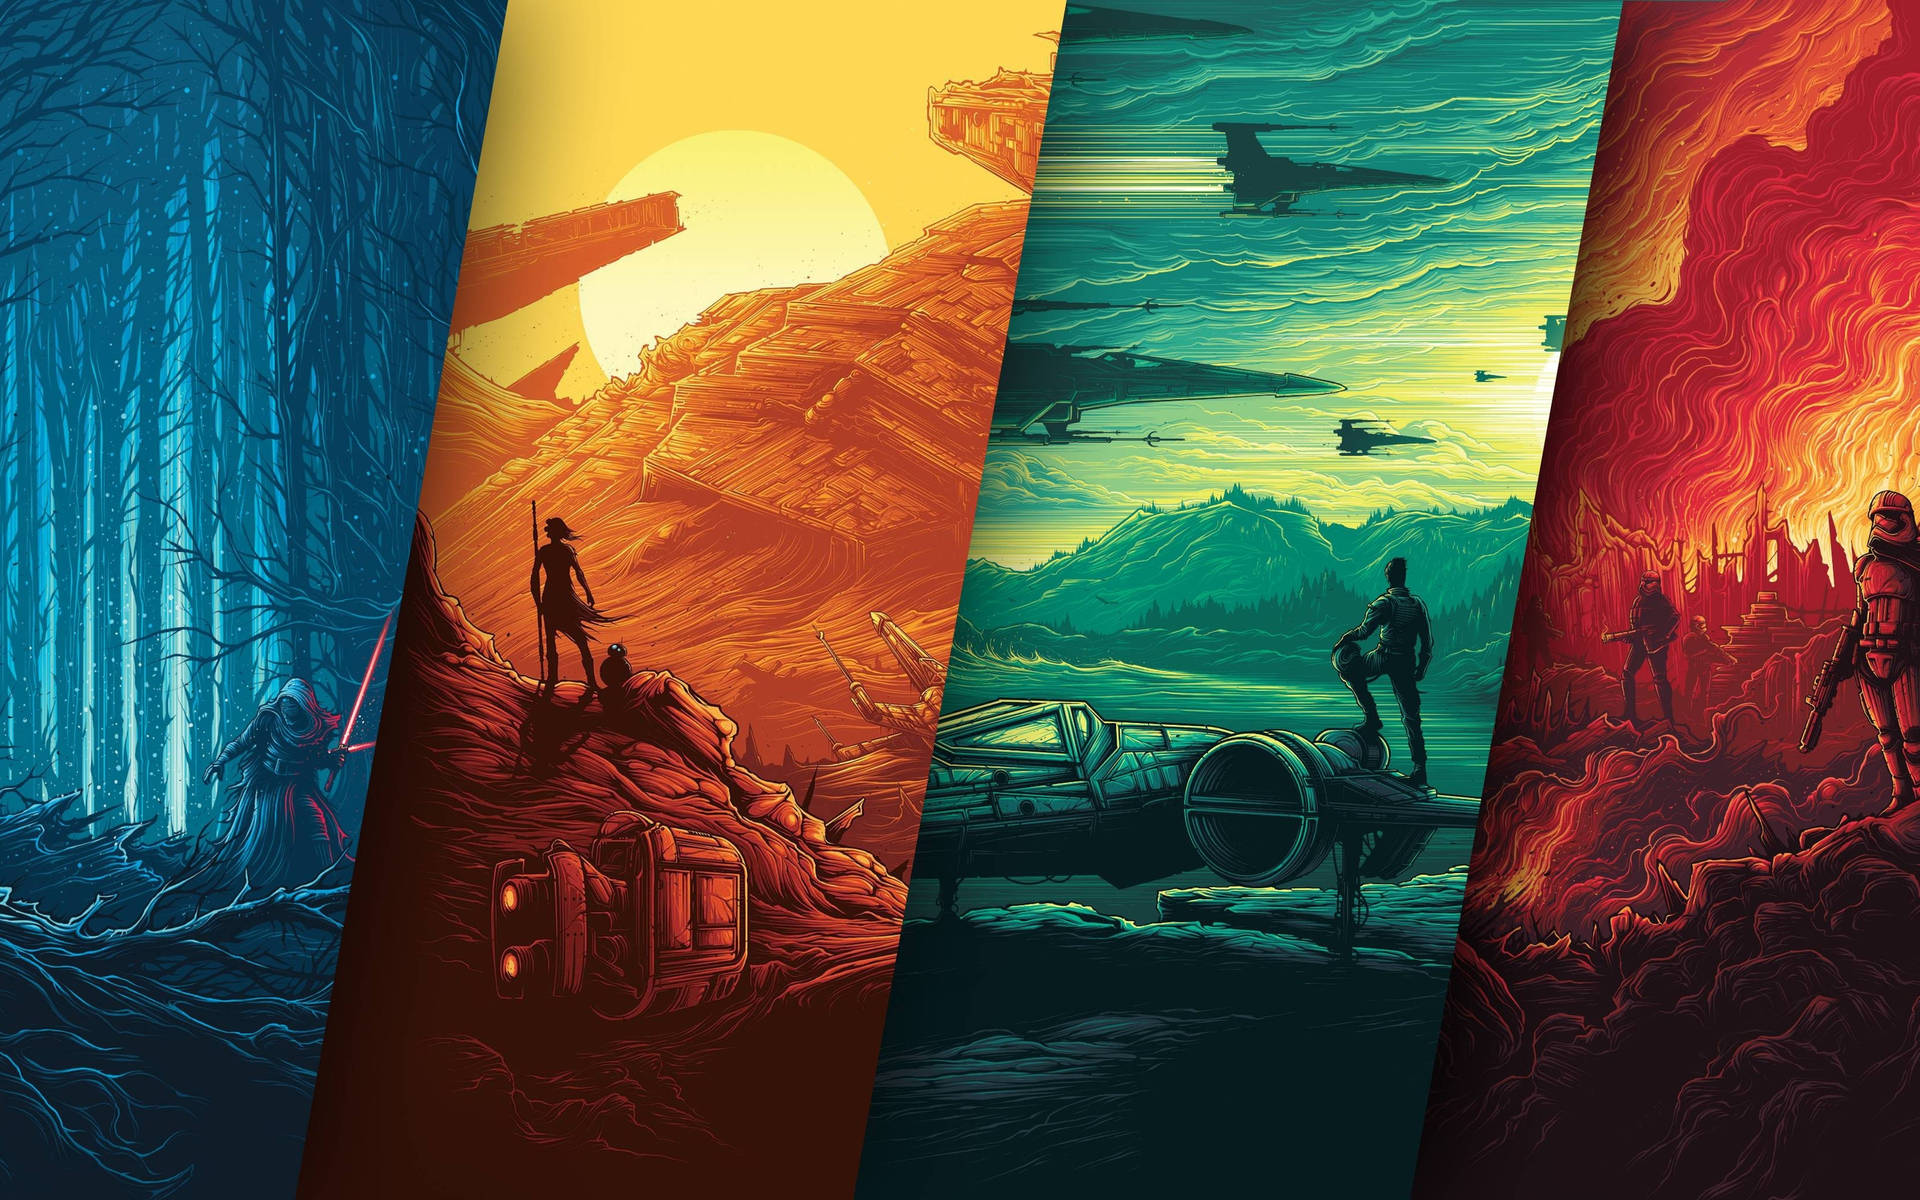 The Intense Battle of Star Wars Wallpaper